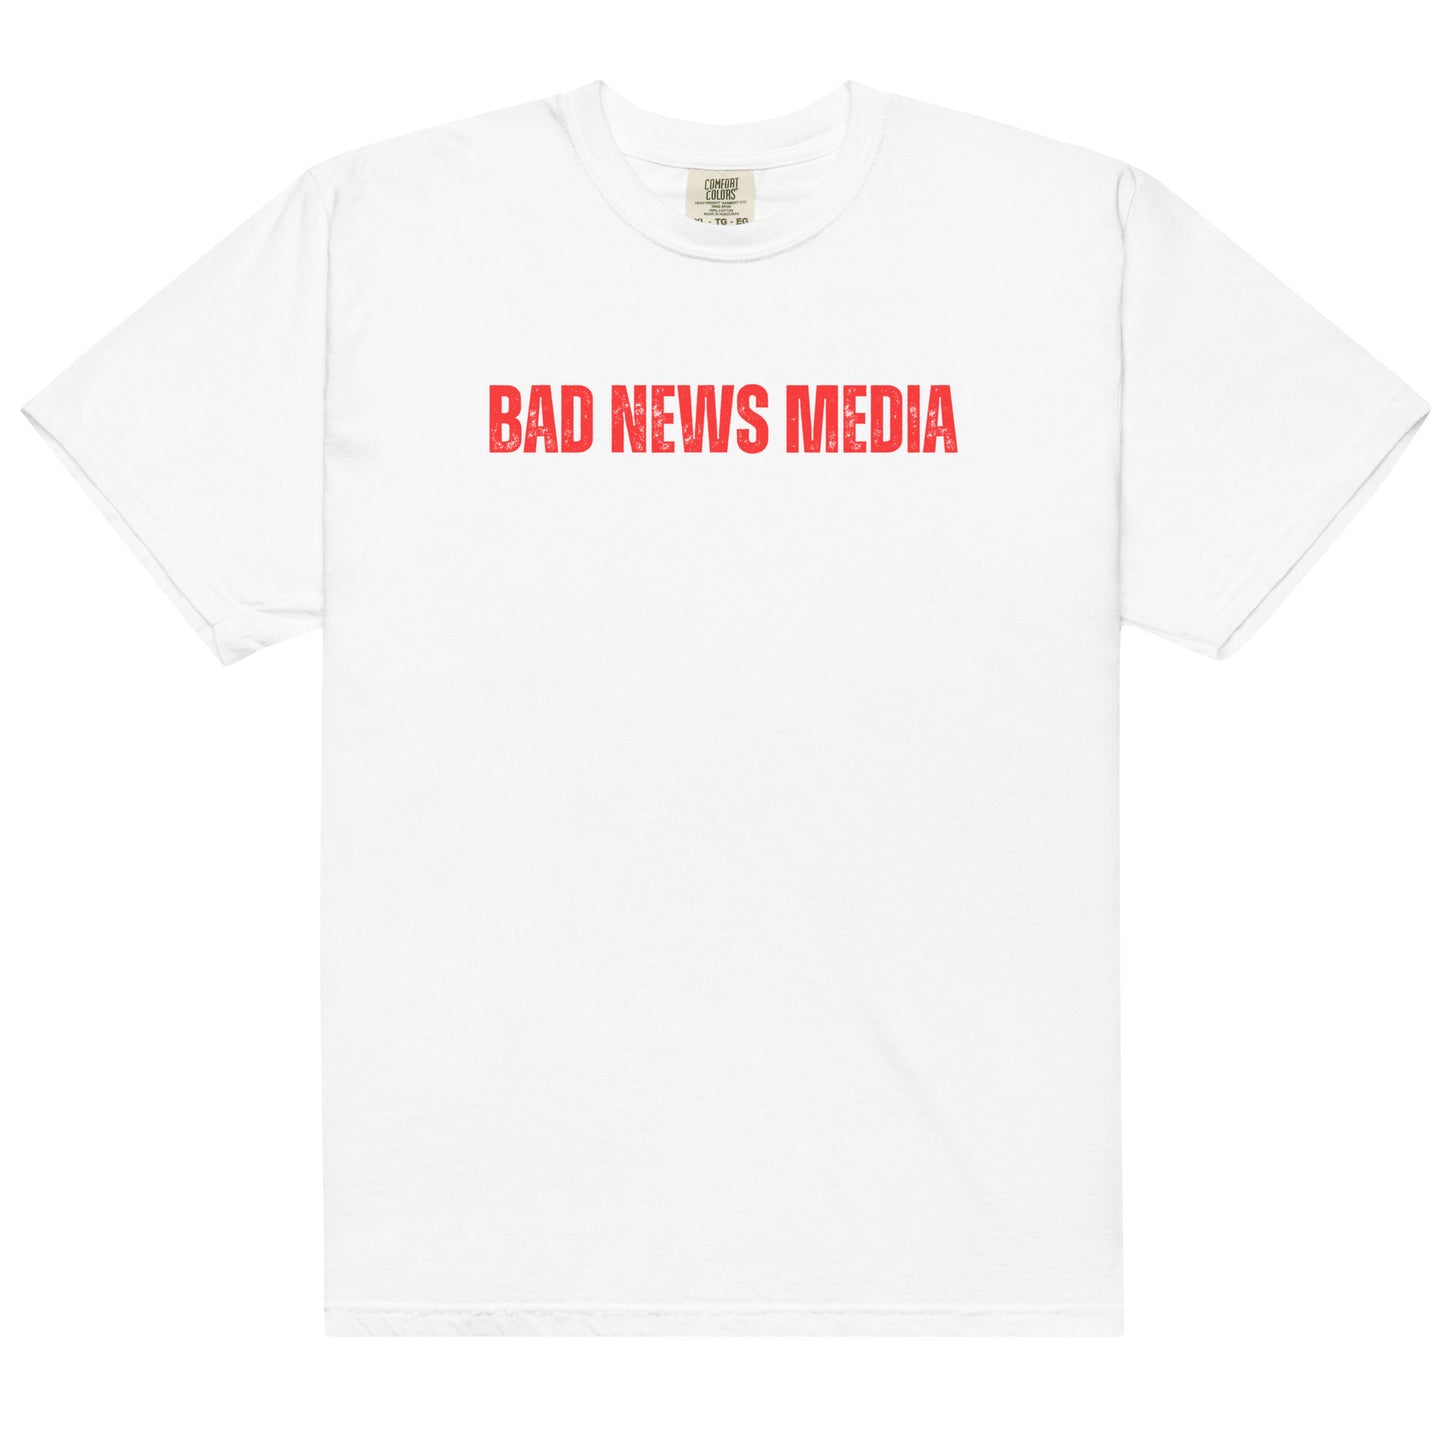 Bad News Media garment-dyed heavyweight t-shirt